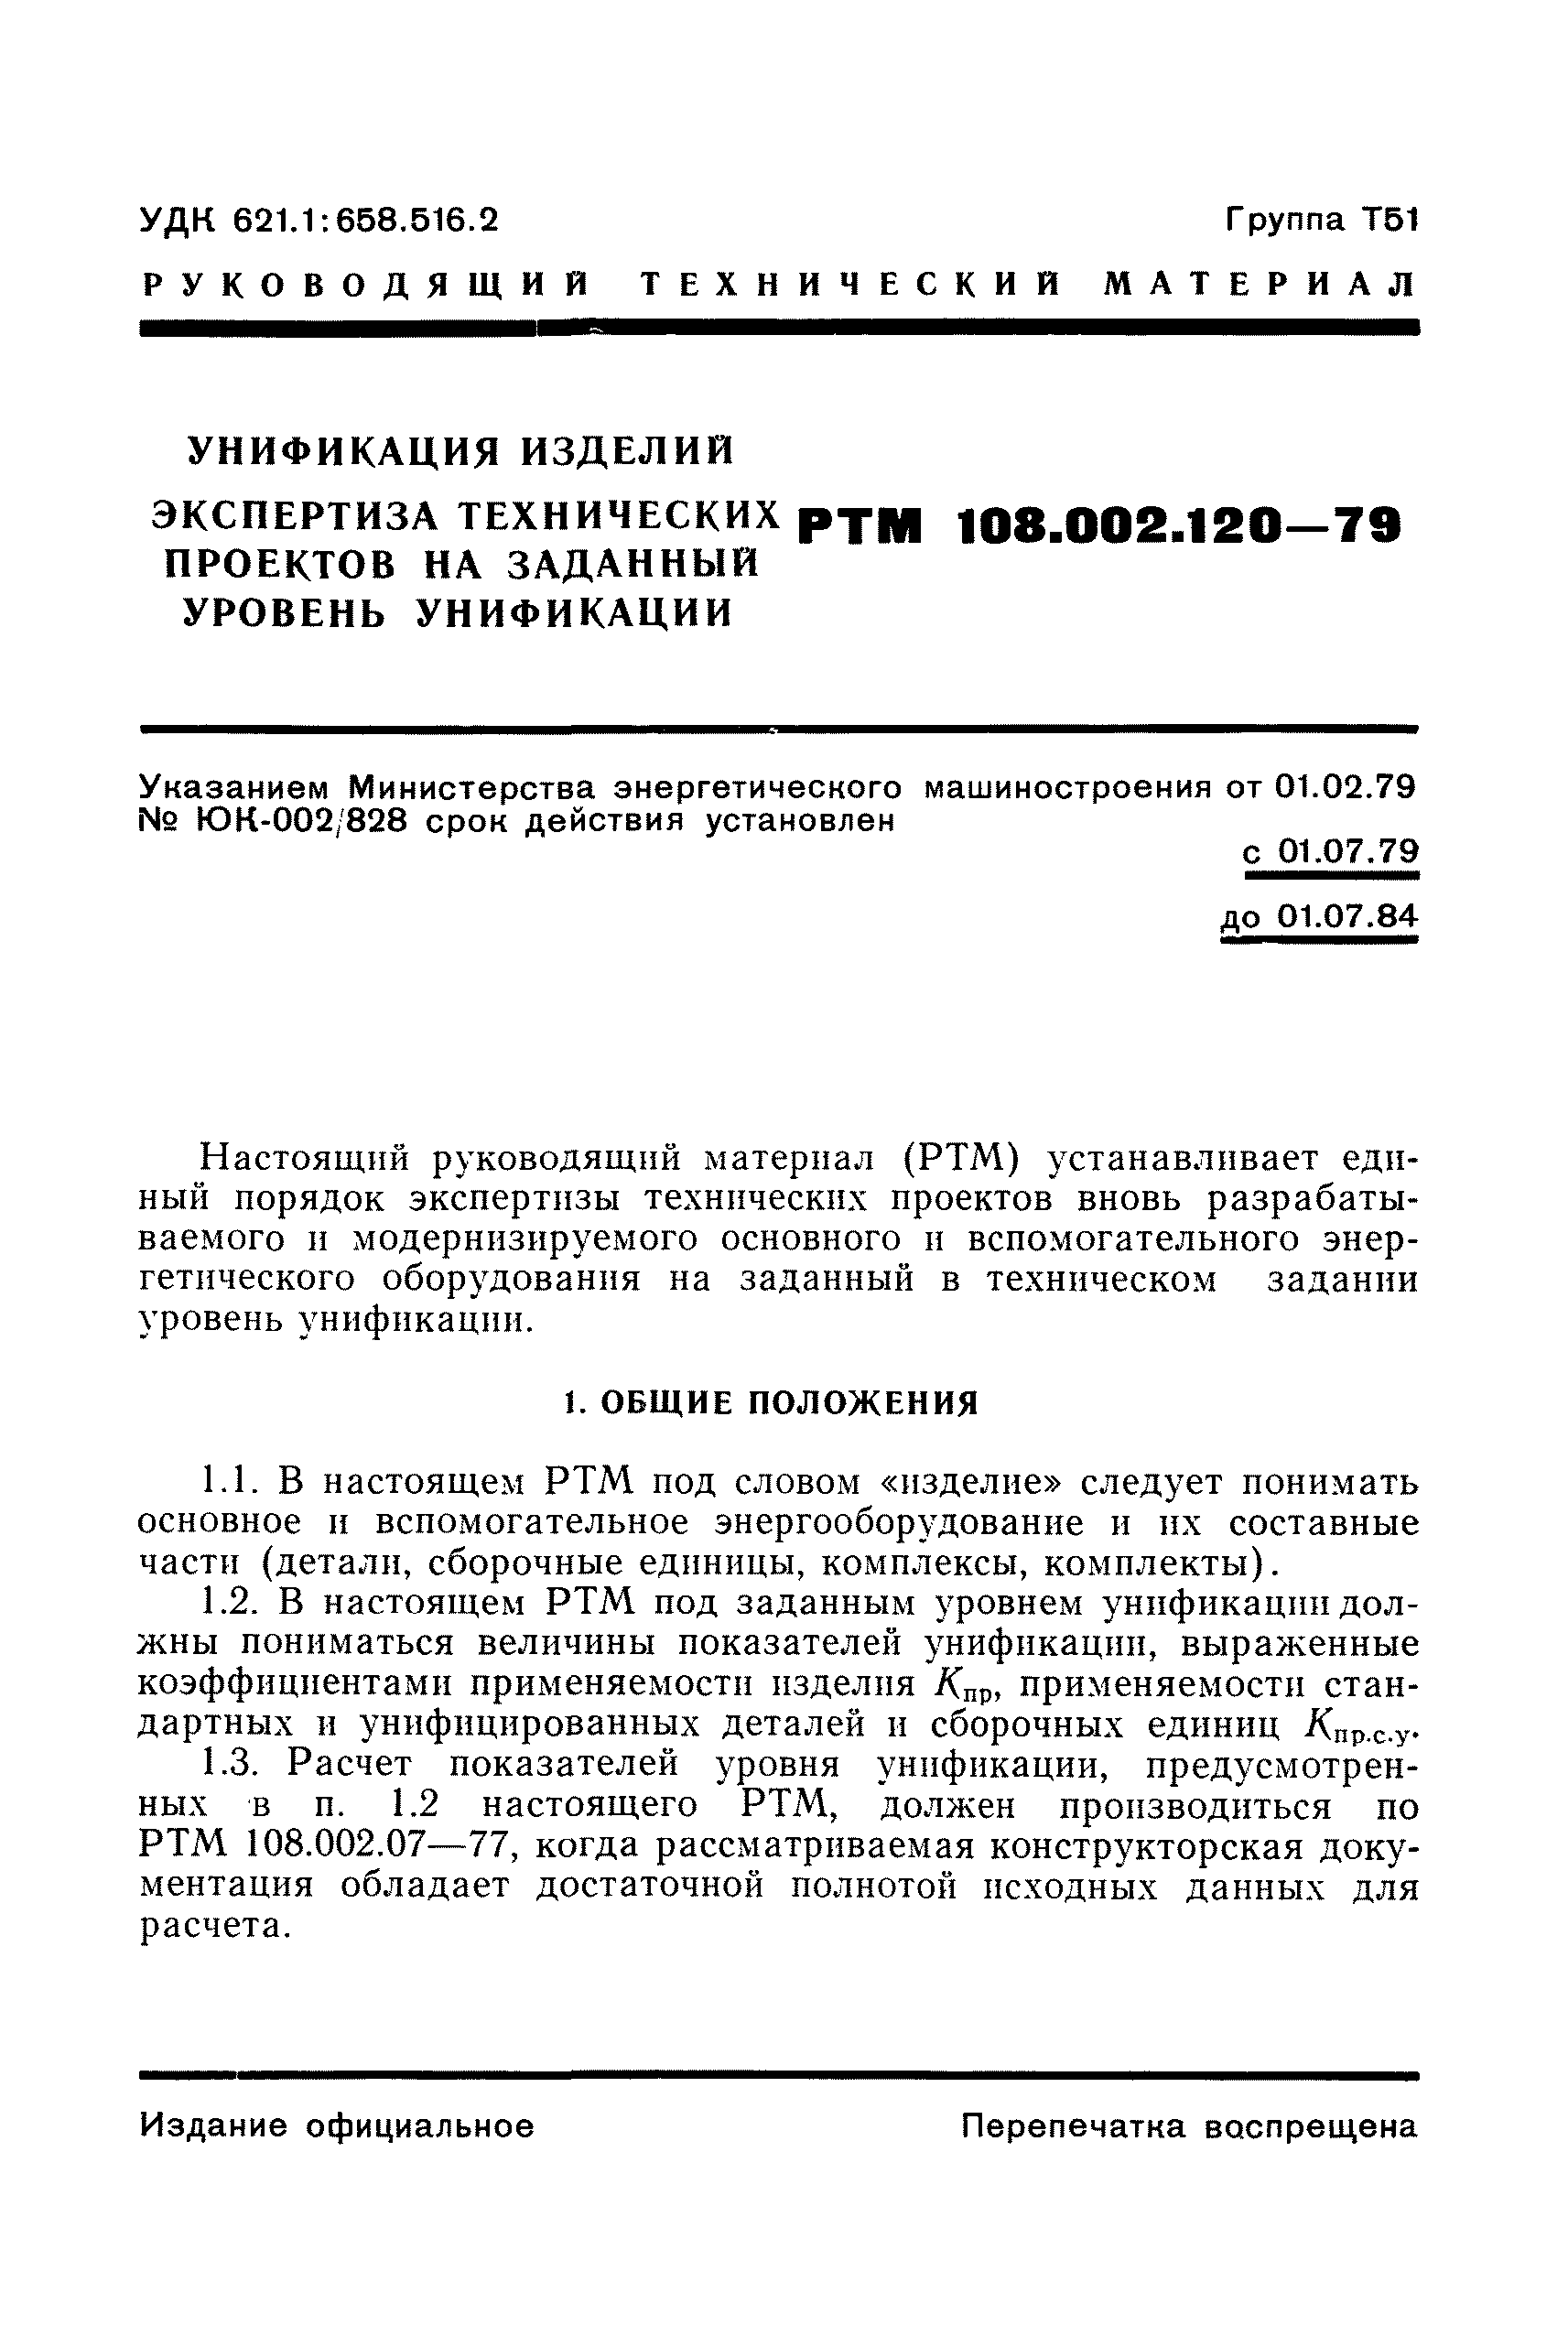 РТМ 108.002.120-79